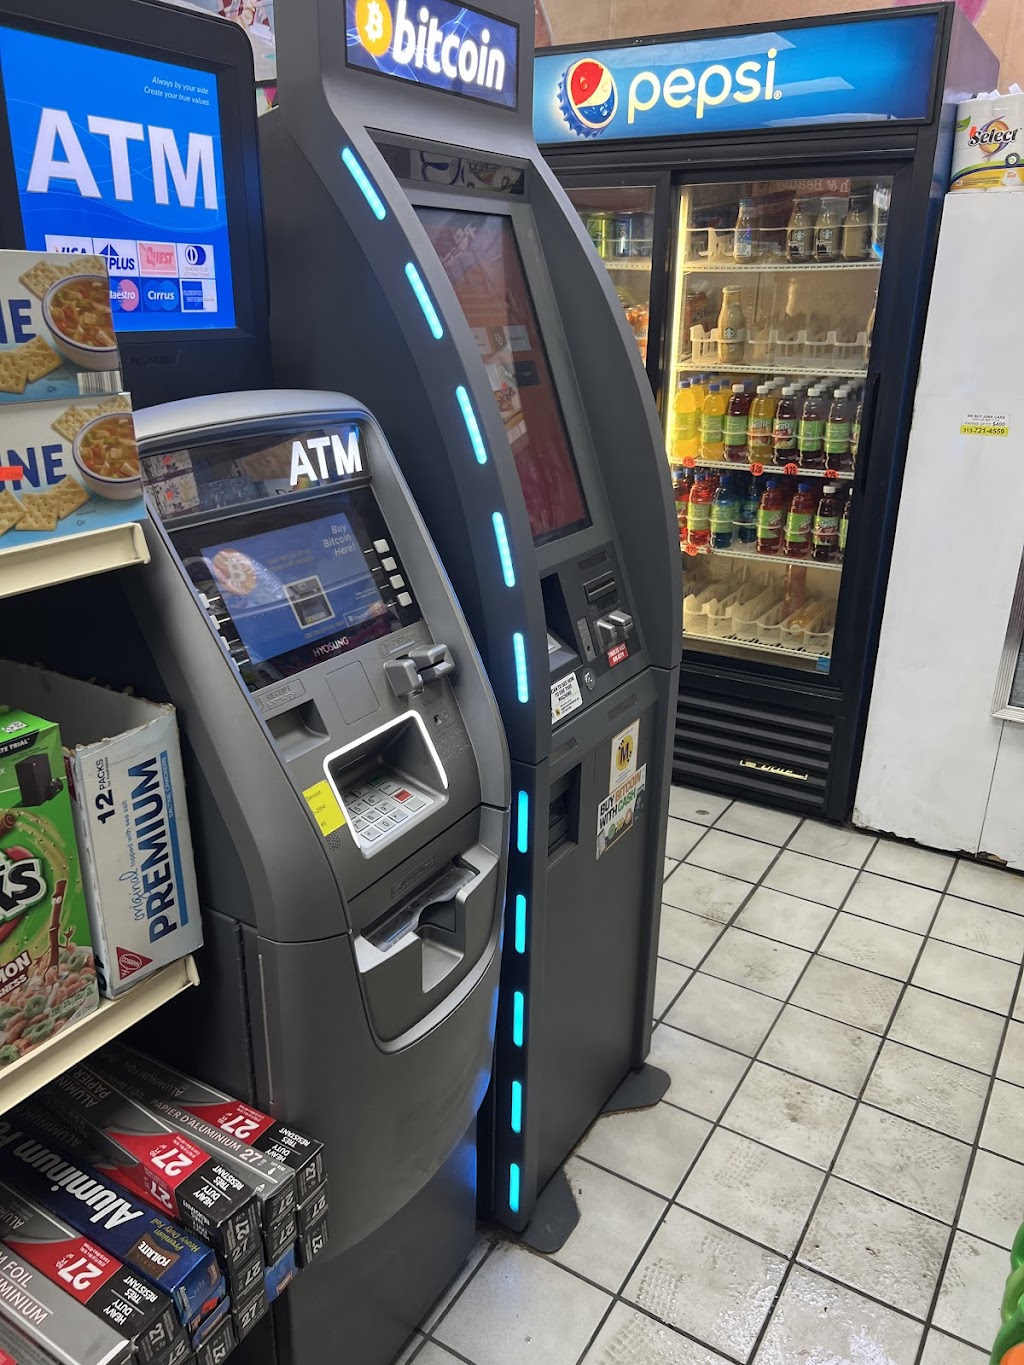 Metrofino Bitcoin ATM | 15525 Schoolcraft Rd, Detroit, MI 48227, USA | Phone: (347) 669-2646